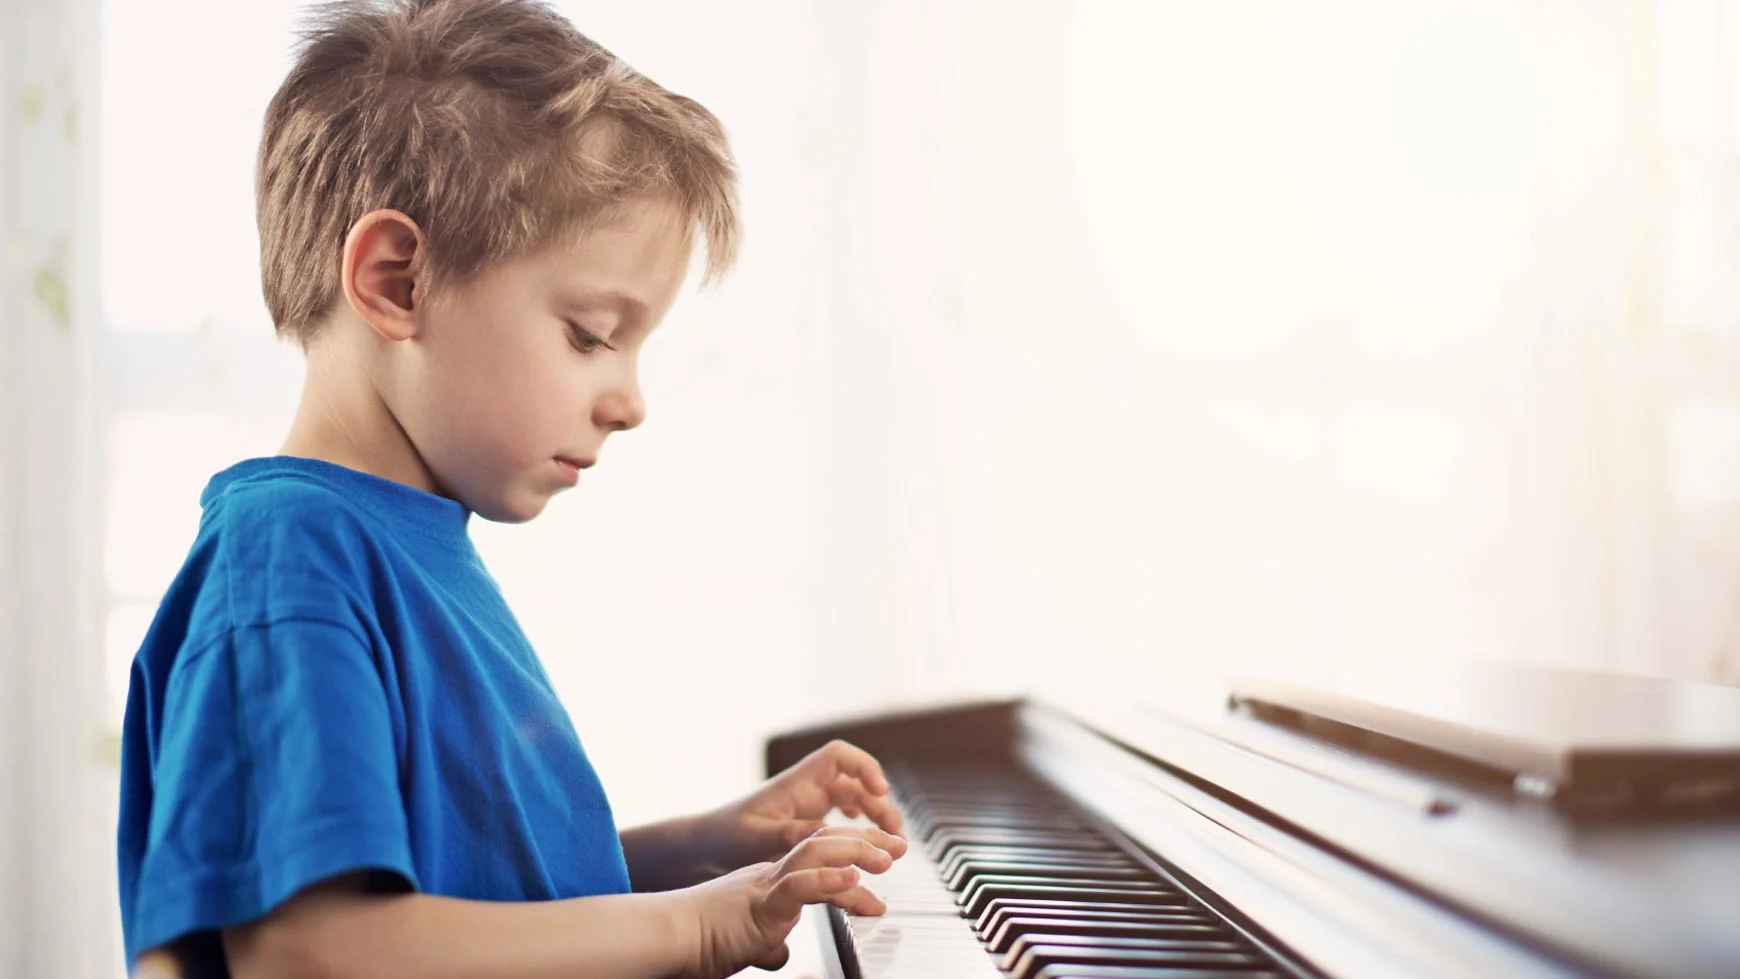 Does he play the piano. Мальчик за фортепиано. Ребенок за пианино. Фортепиано для детей. Ребенок за фортепиано.